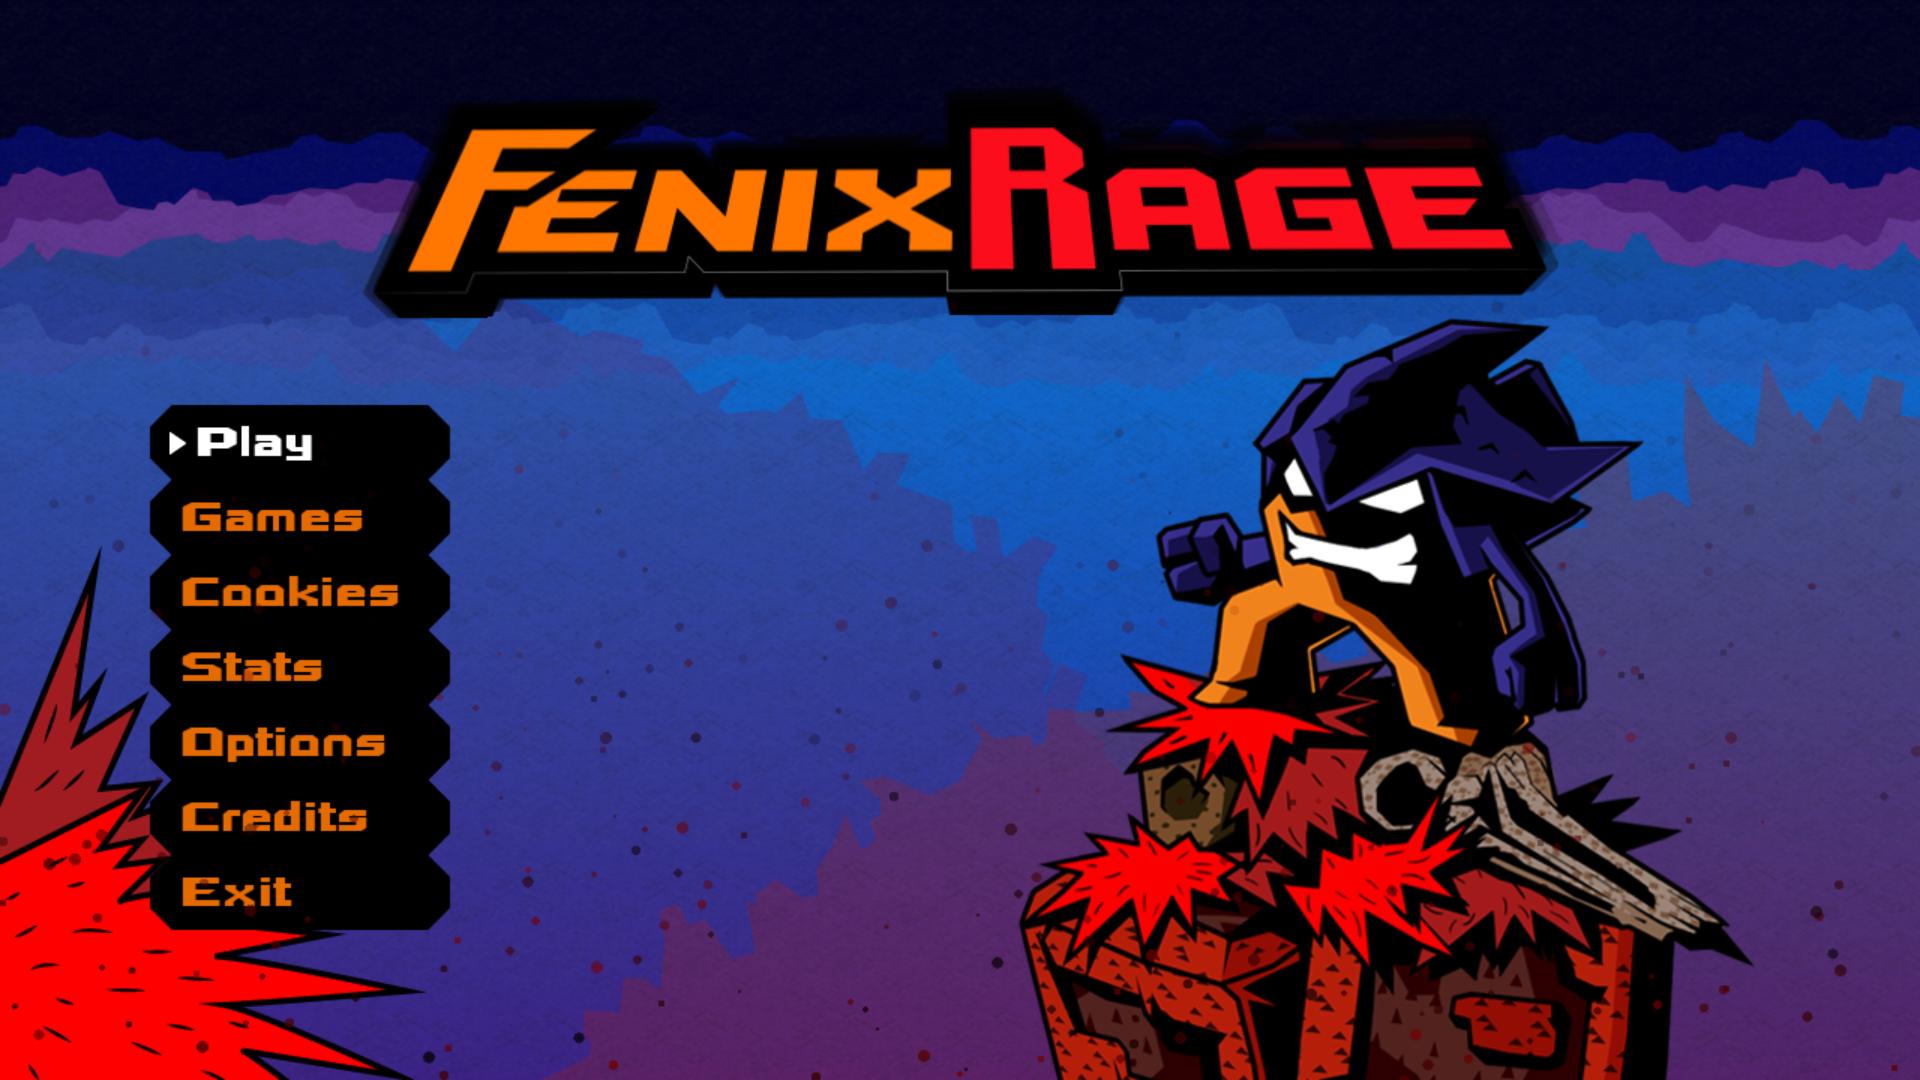 Amazing Fenix Rage Pictures & Backgrounds